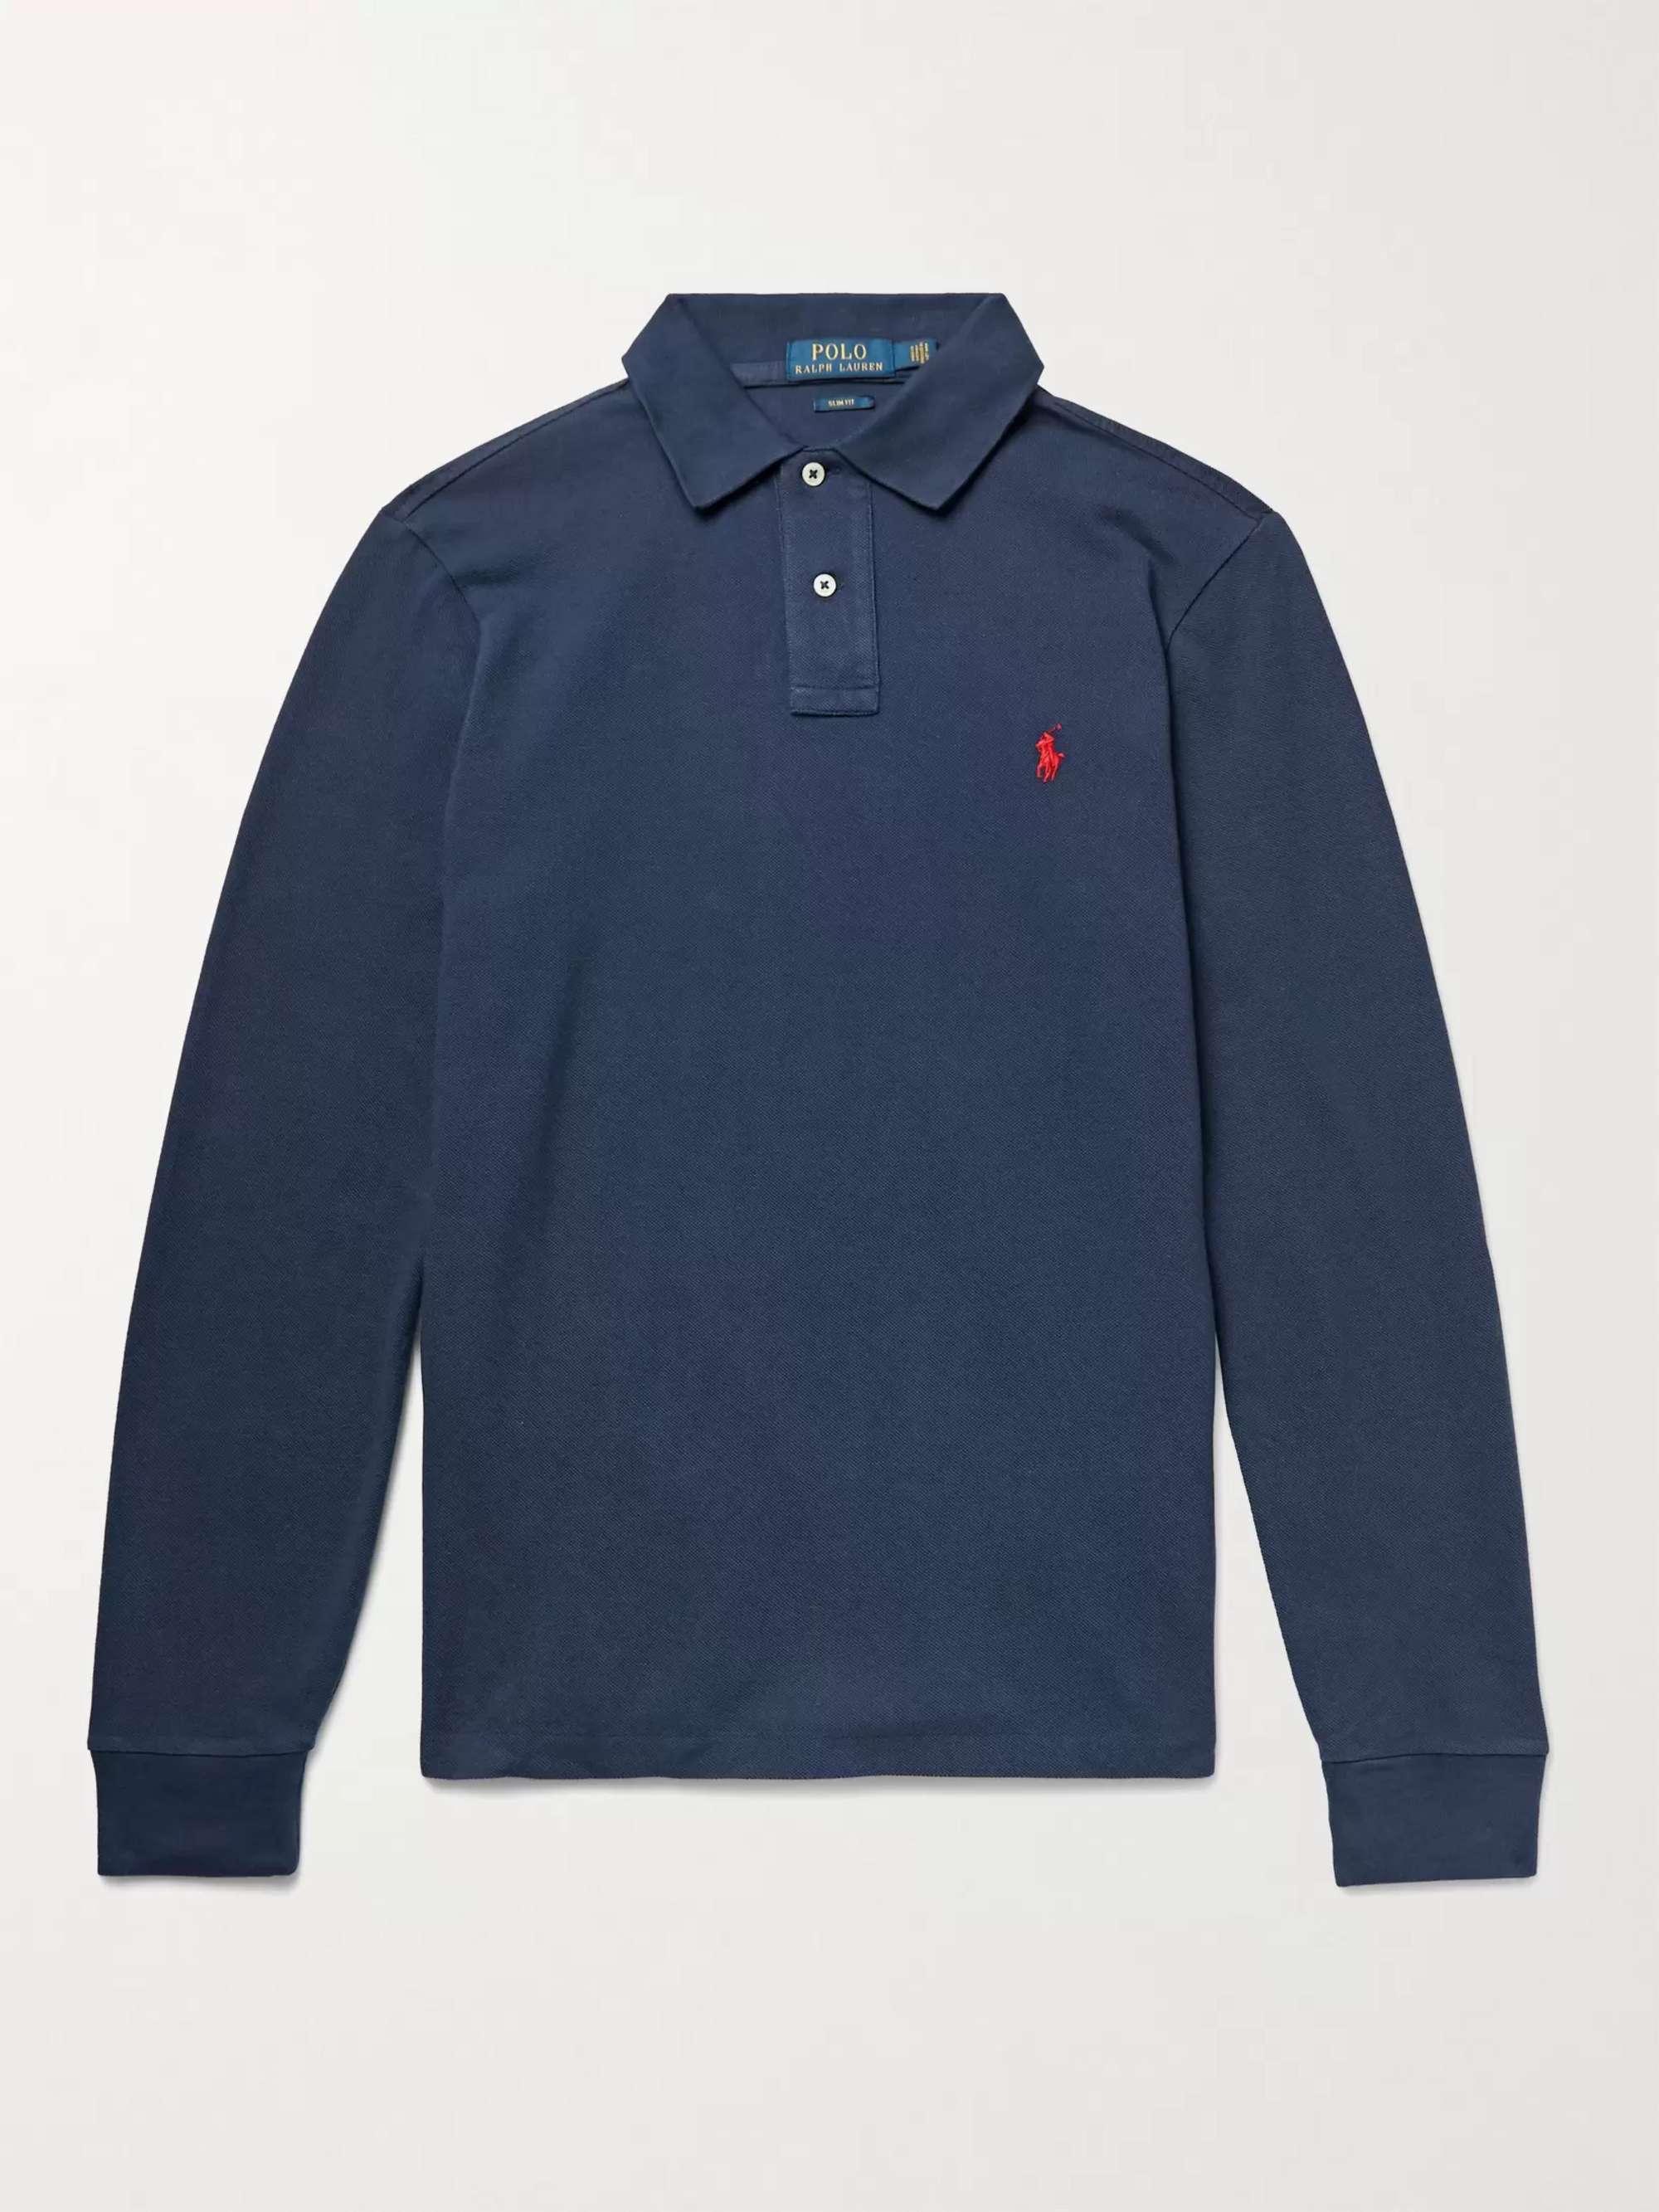 Polo RALPH LAUREN Slim-Fit Cotton-Pique Polo Shirt,Navy